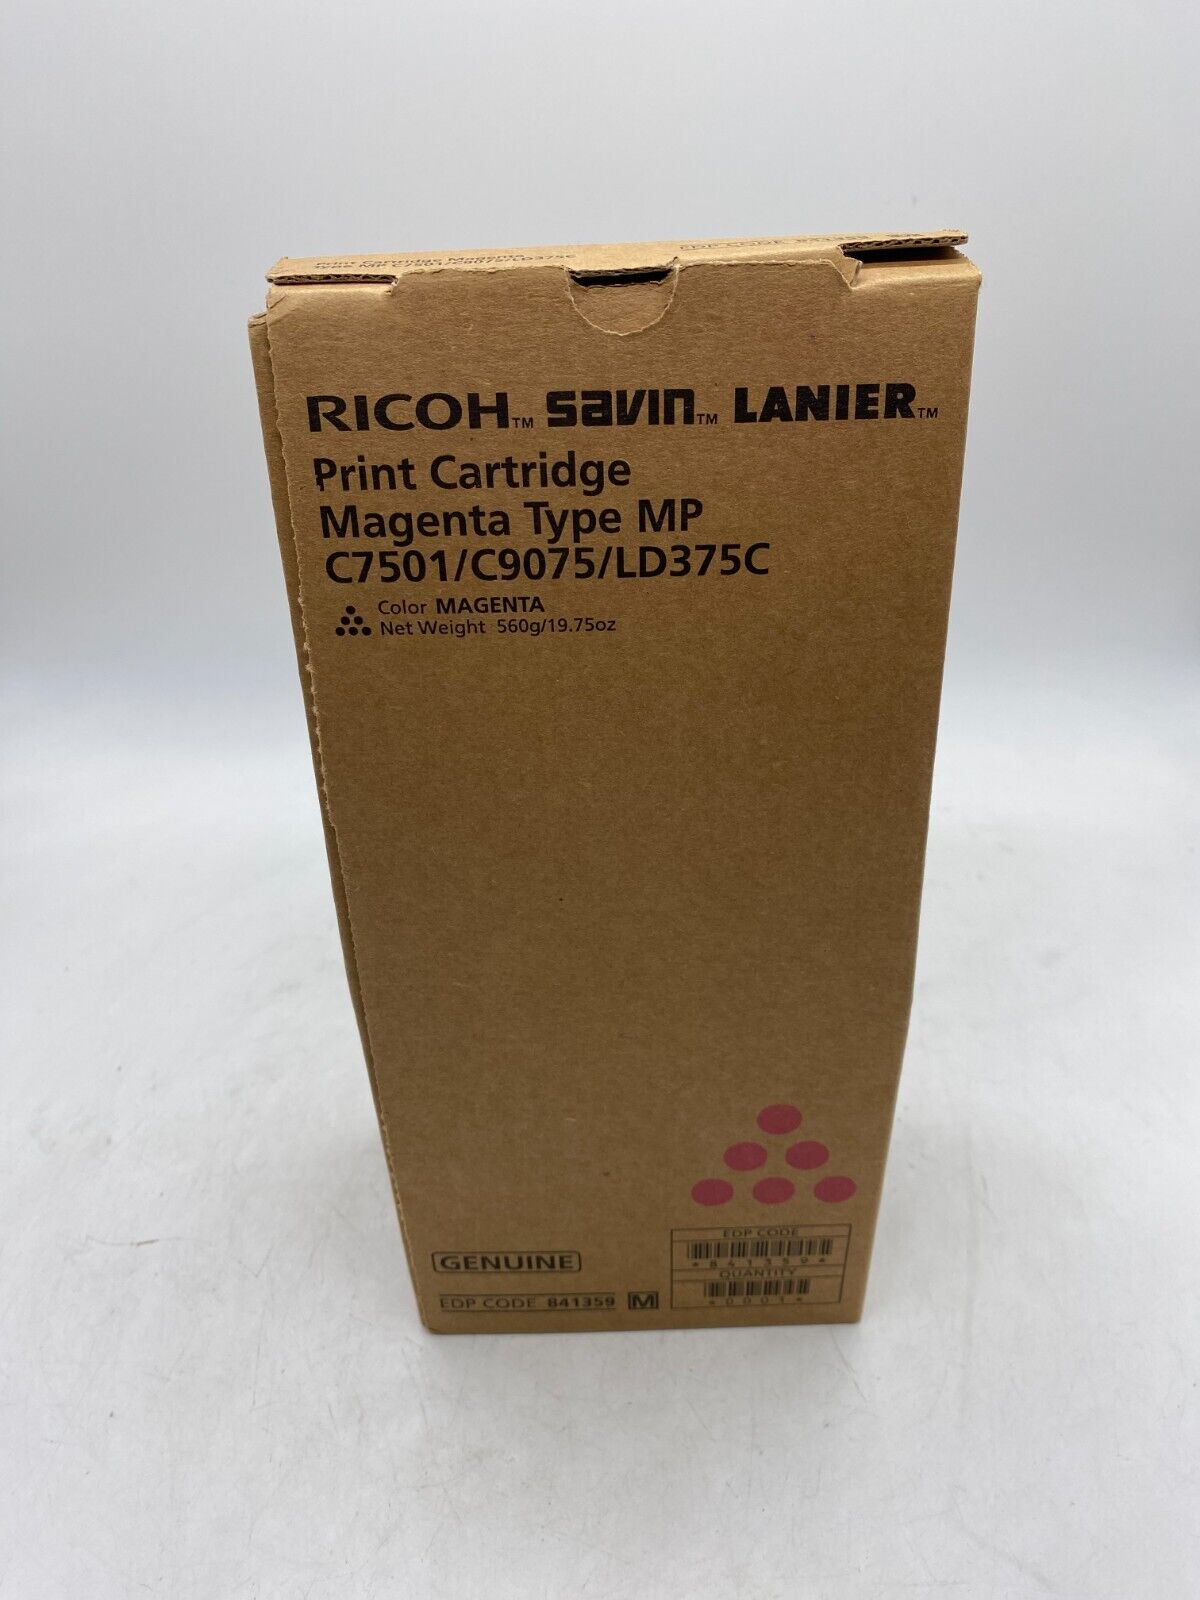 Ricoh Savin Lanier Magenta 841359 Toner Cartridge Type MP C7501/C9075/LD375C